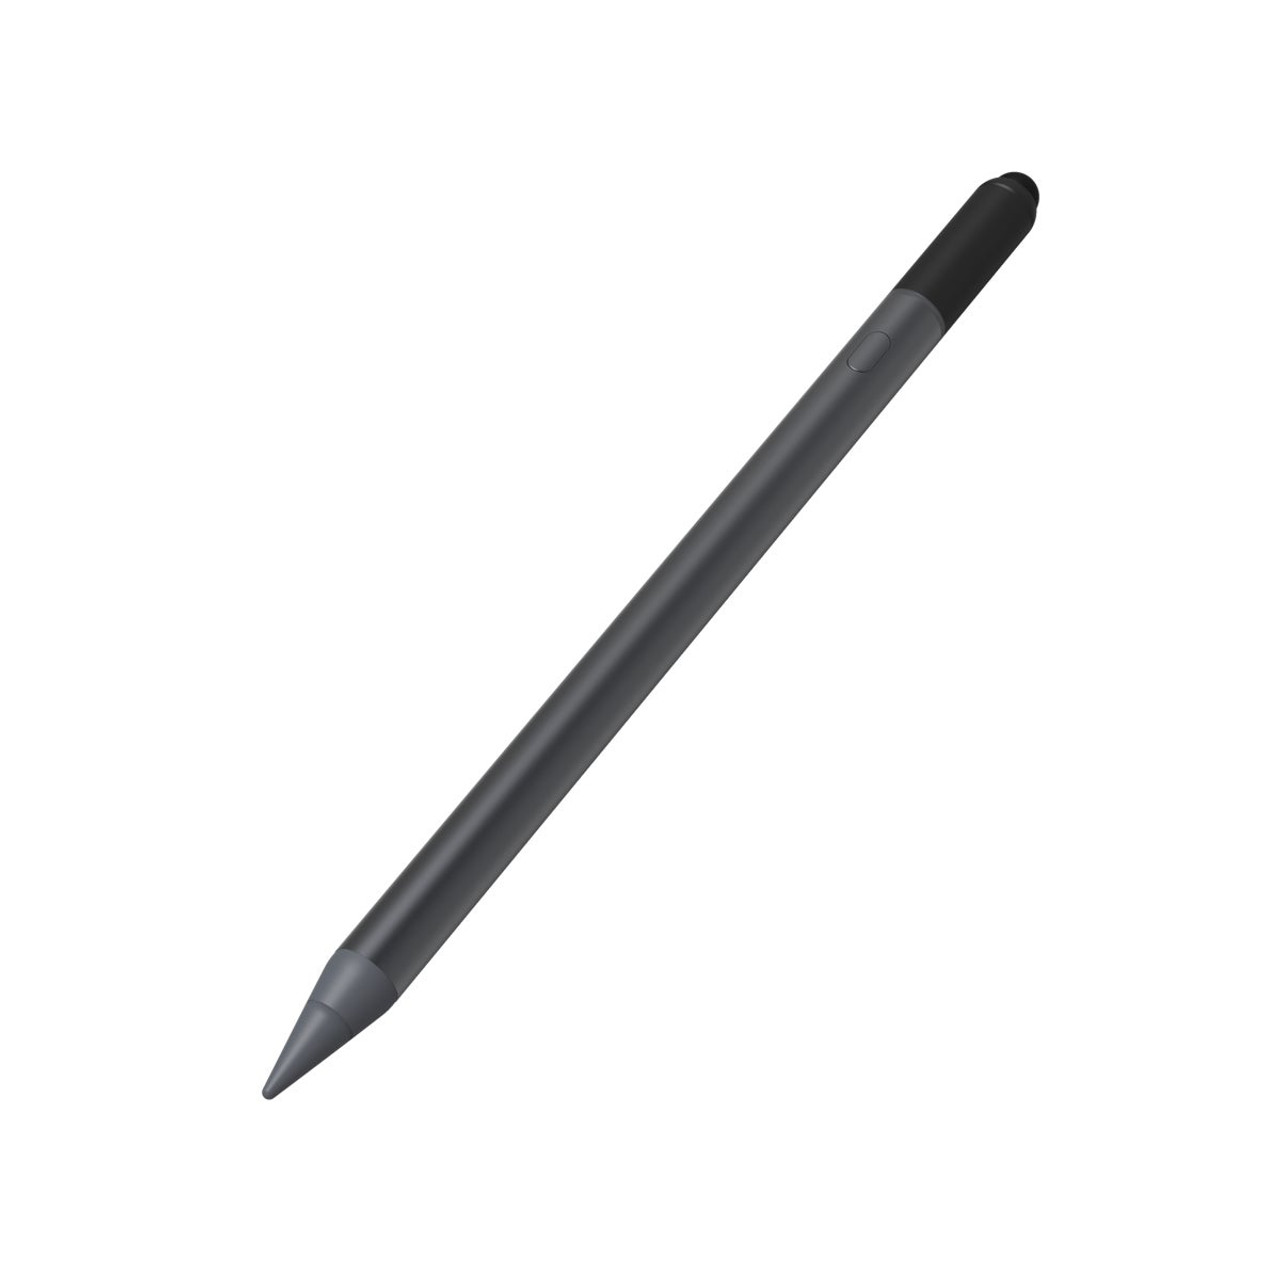 SaharaBasics - Stylus Pencil for All Apple iPads and Galaxy Tabs